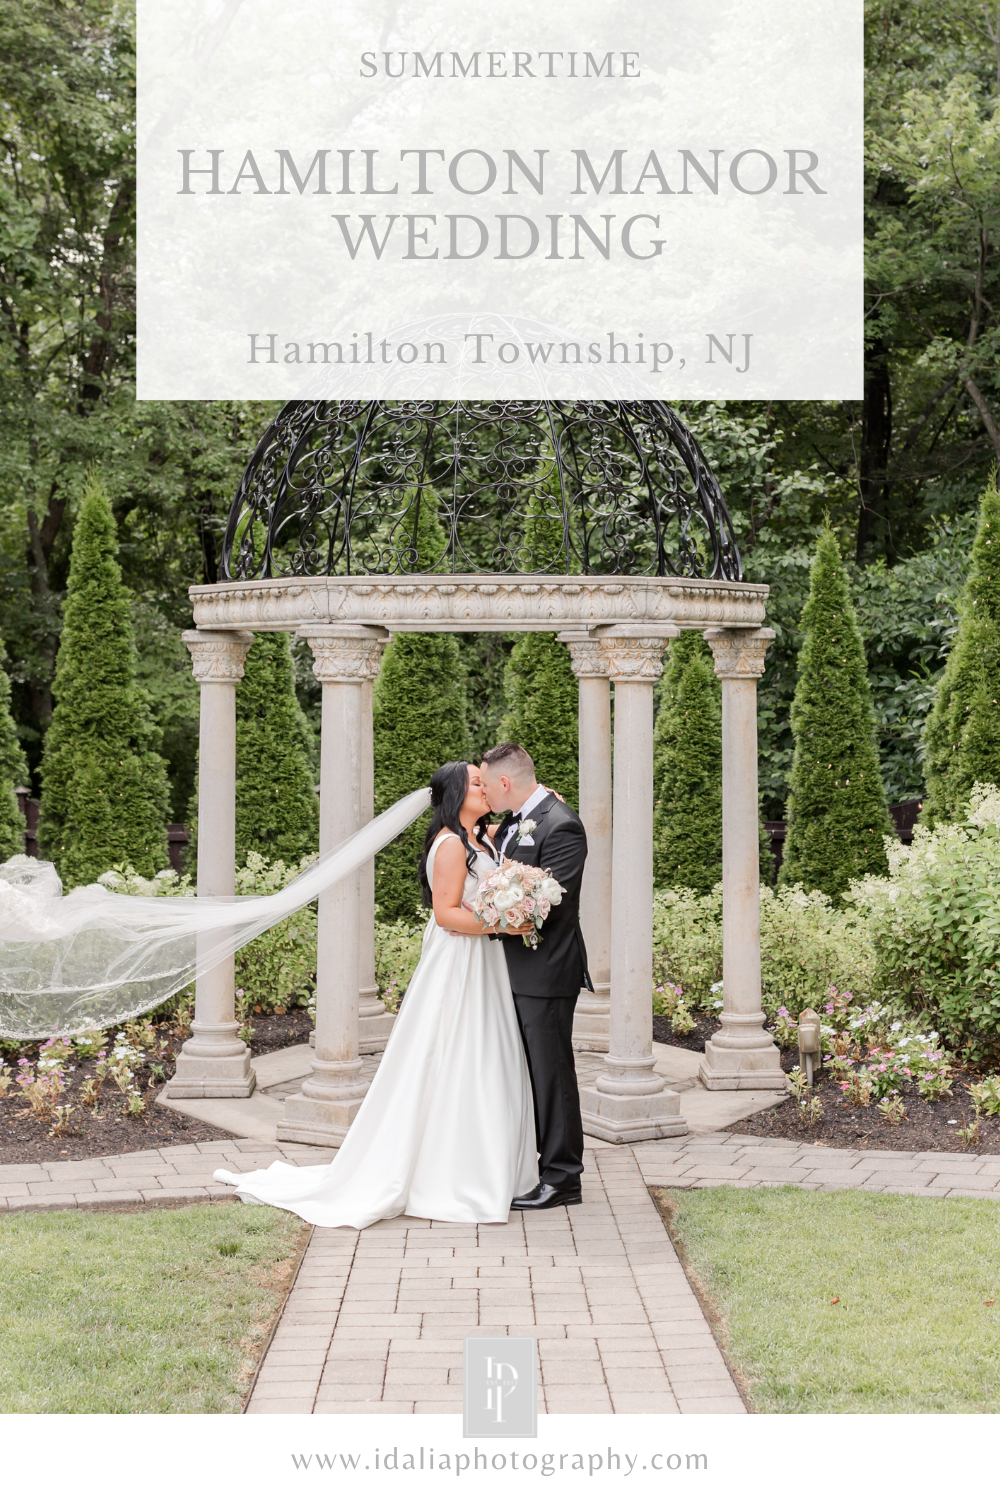 Hamilton Manor Wedding with rustic wedding details photographed by NJ wedding photographer Idalia Photography